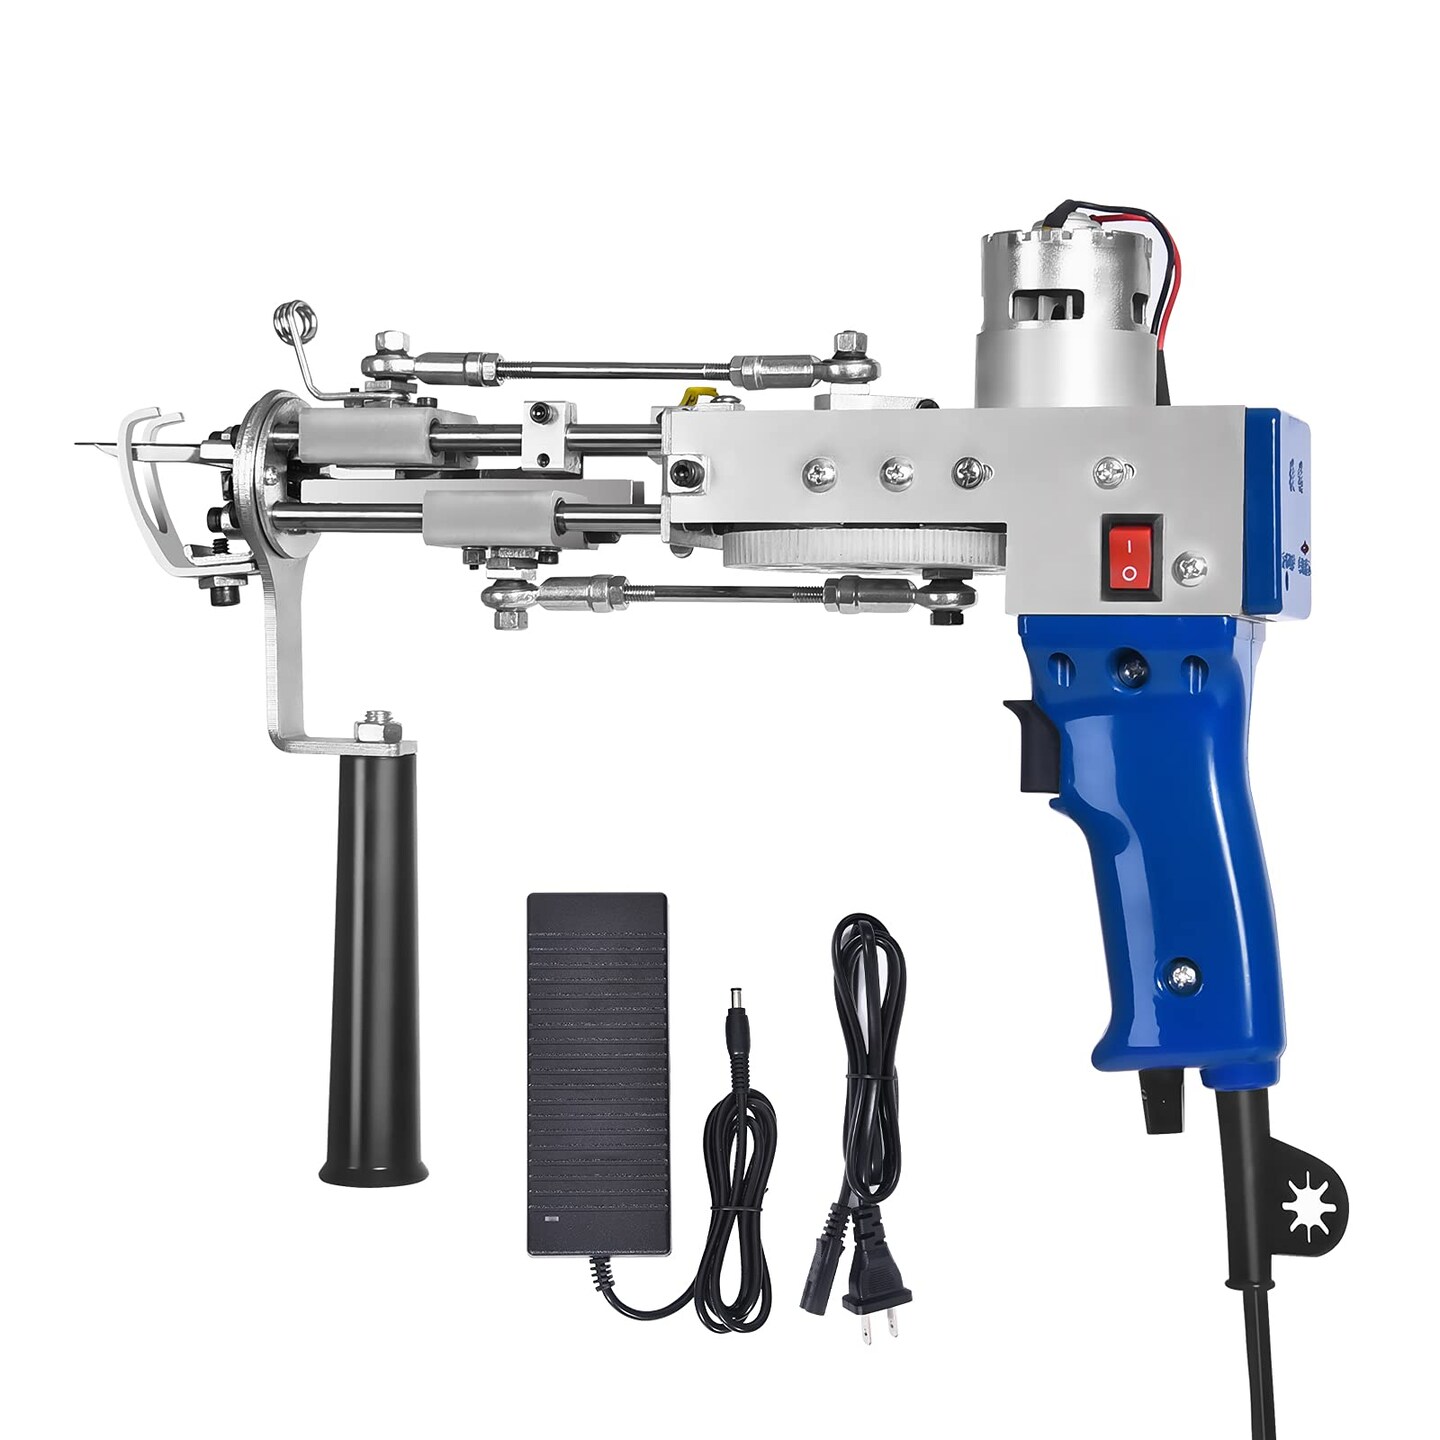 Vehipa Tufting Gun Cut Pile and Loop Pile 2 in 1 Electric Rug Gun Machine Starter Kit for Tufting Lover